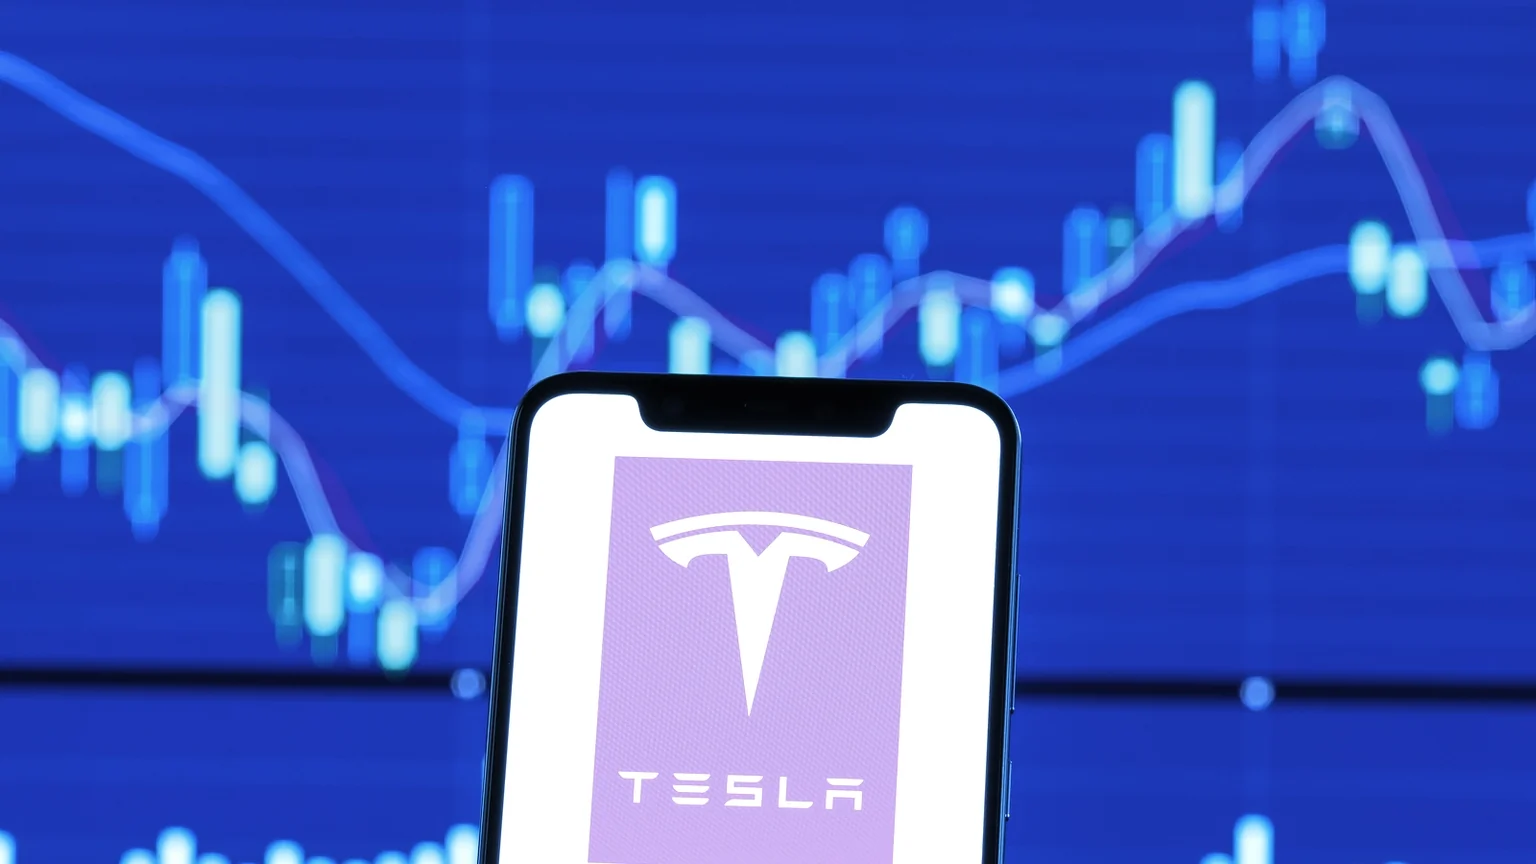 Tesla stock prices. Image: Shutterstock